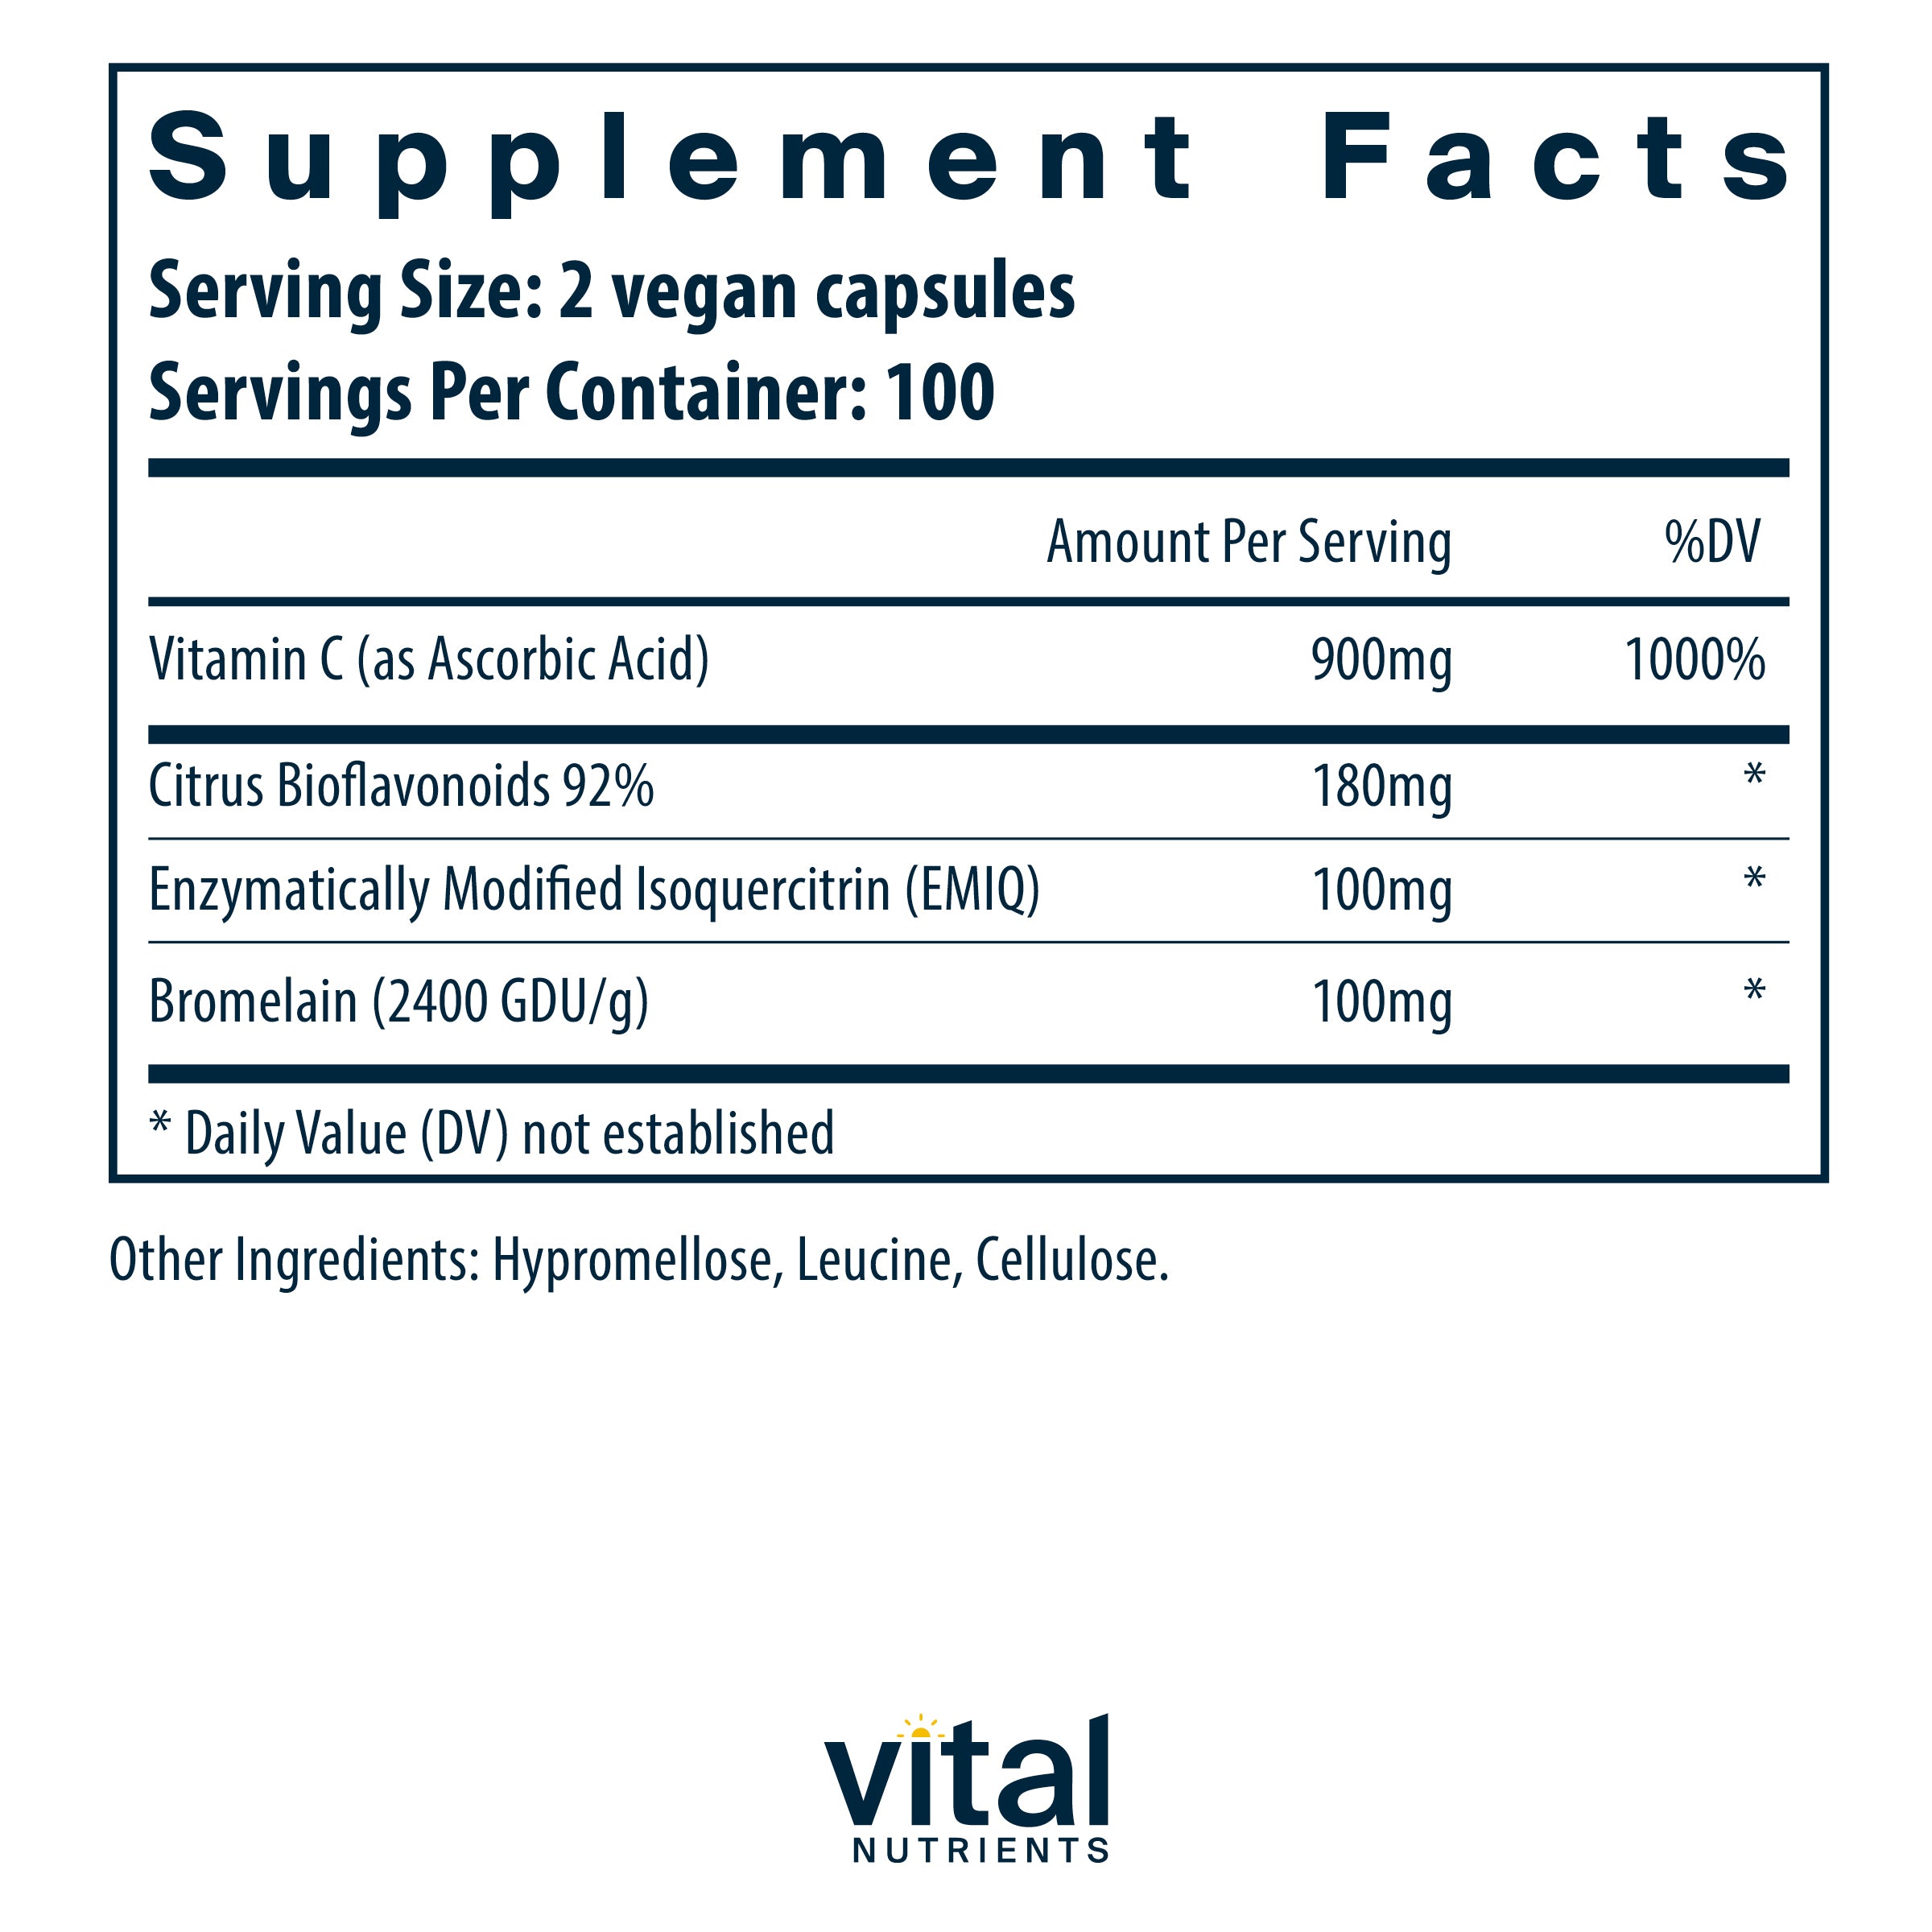 Aller C - 200 Capsules | Vital Nutrients